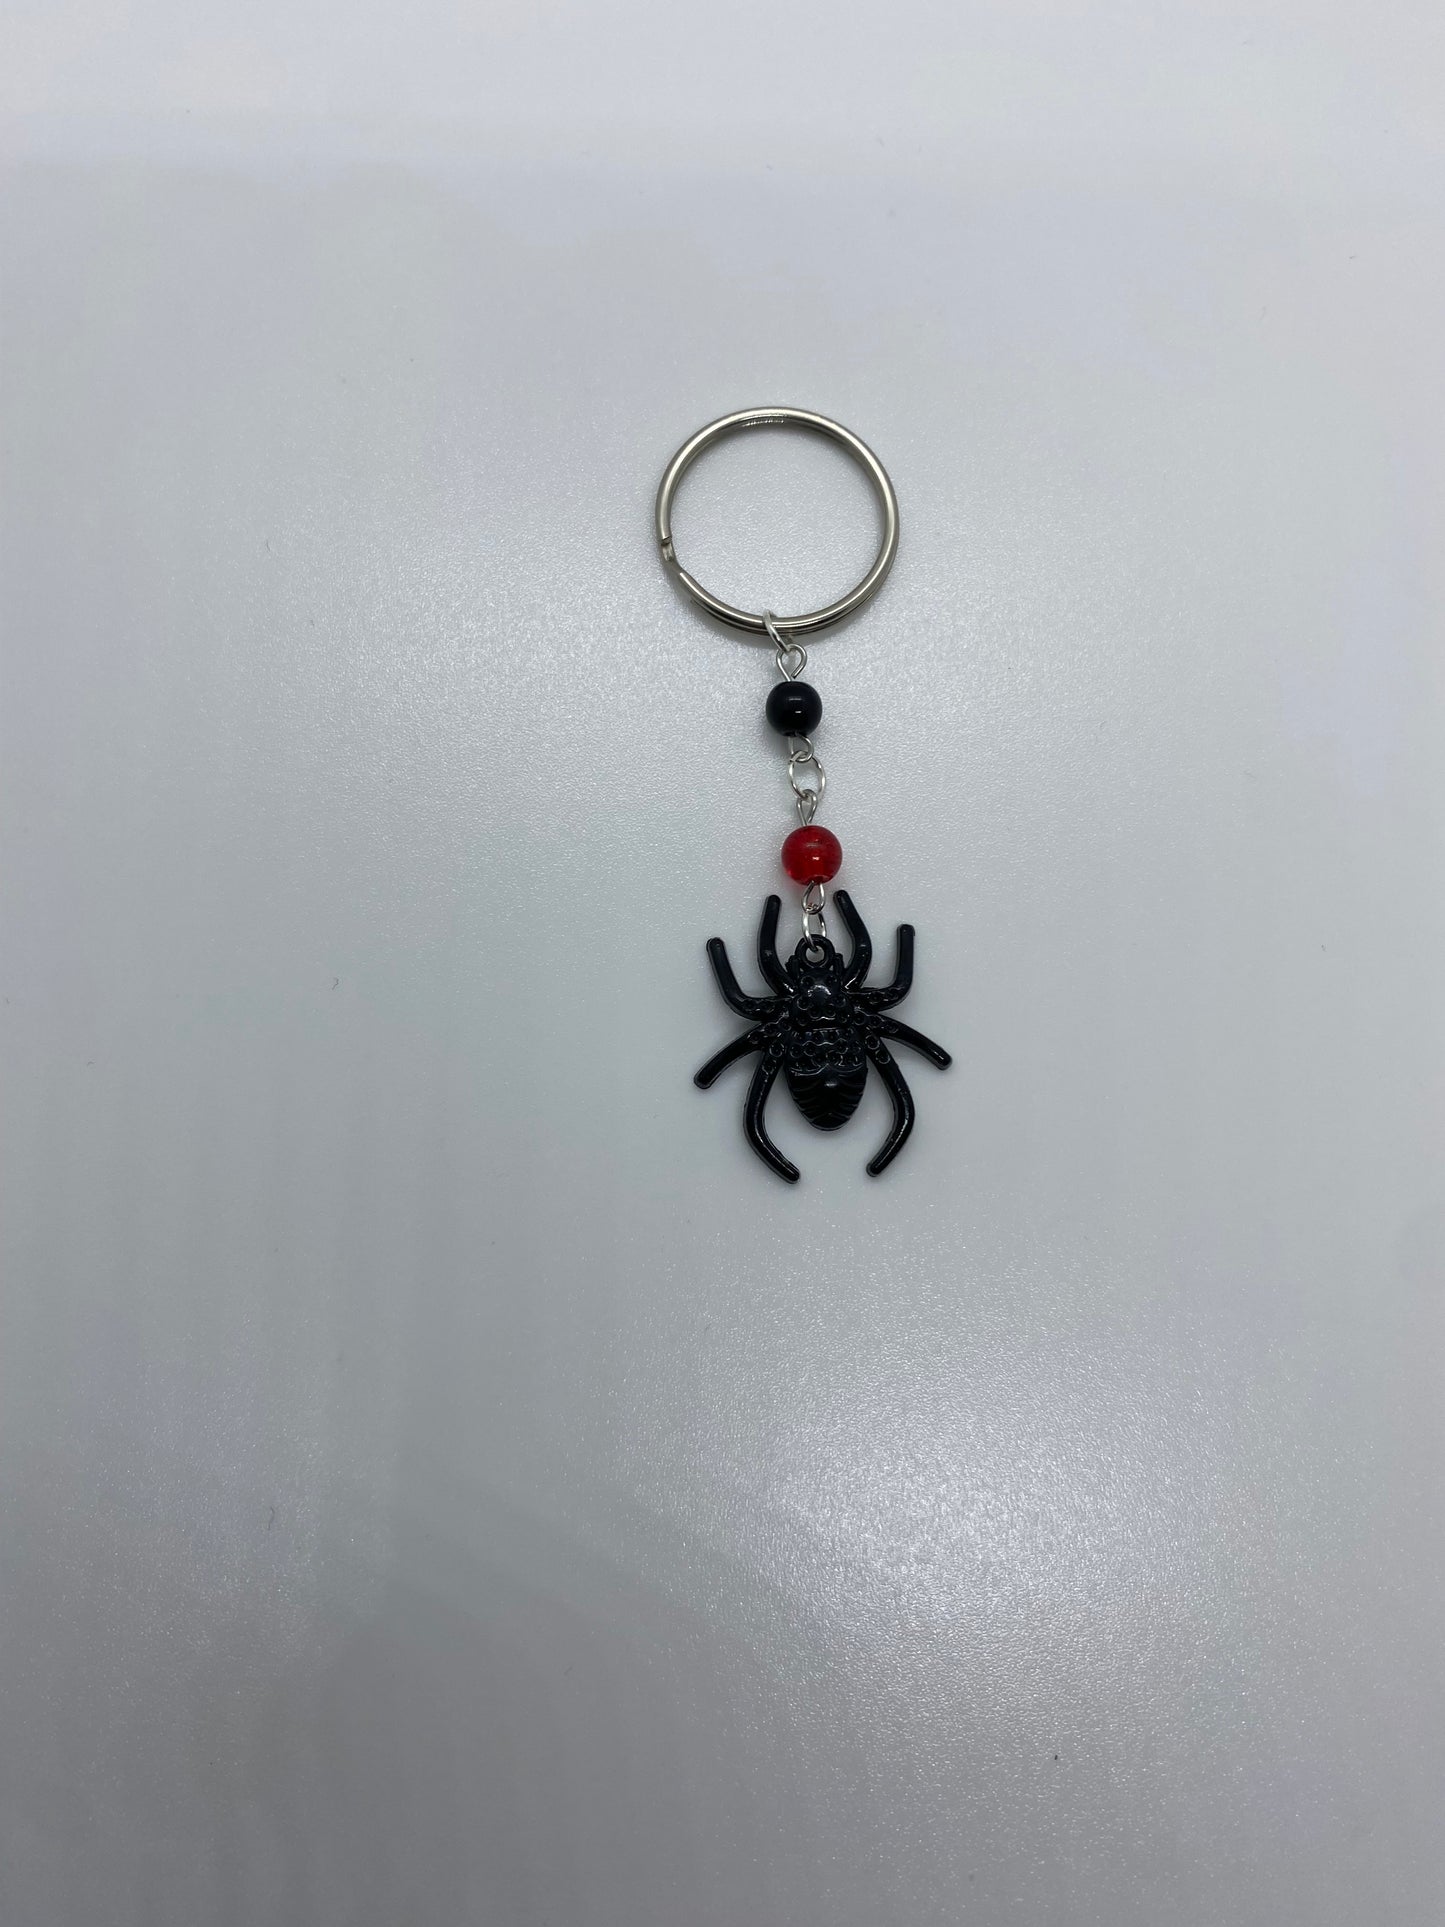 Spider Keychains (Please Read Description!)